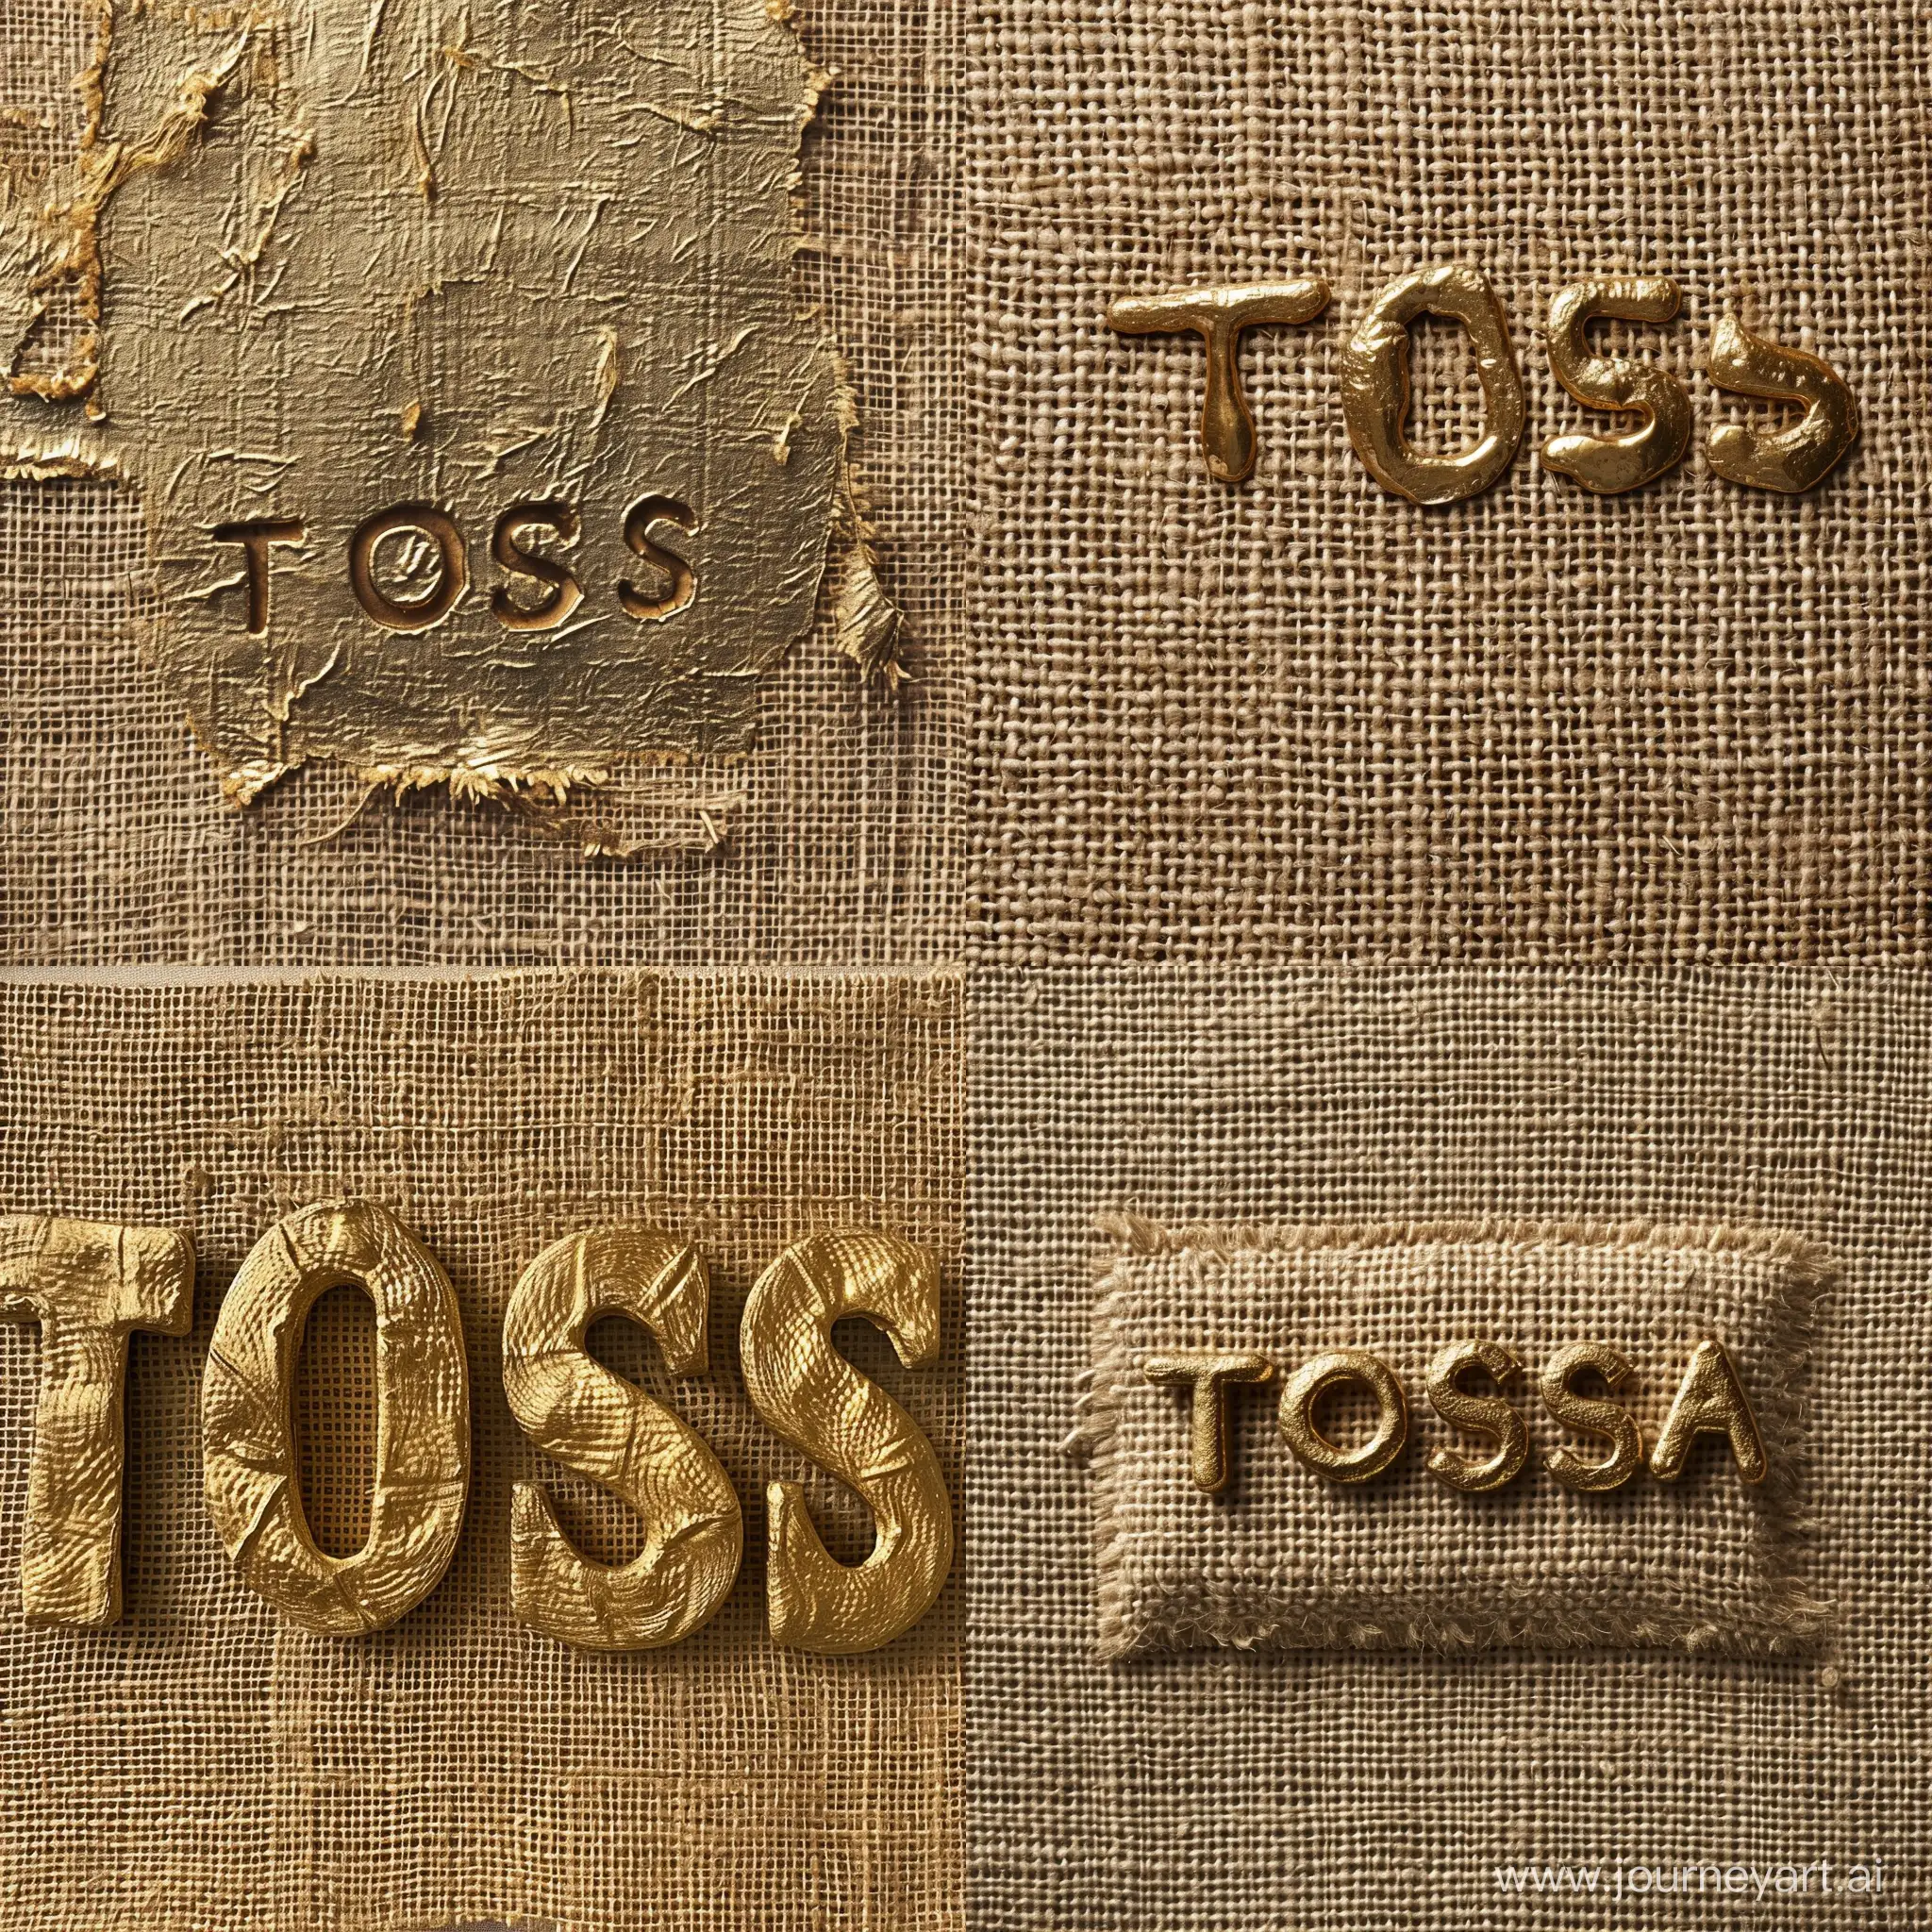 Write in golden metal "TOSSA" on raw jute